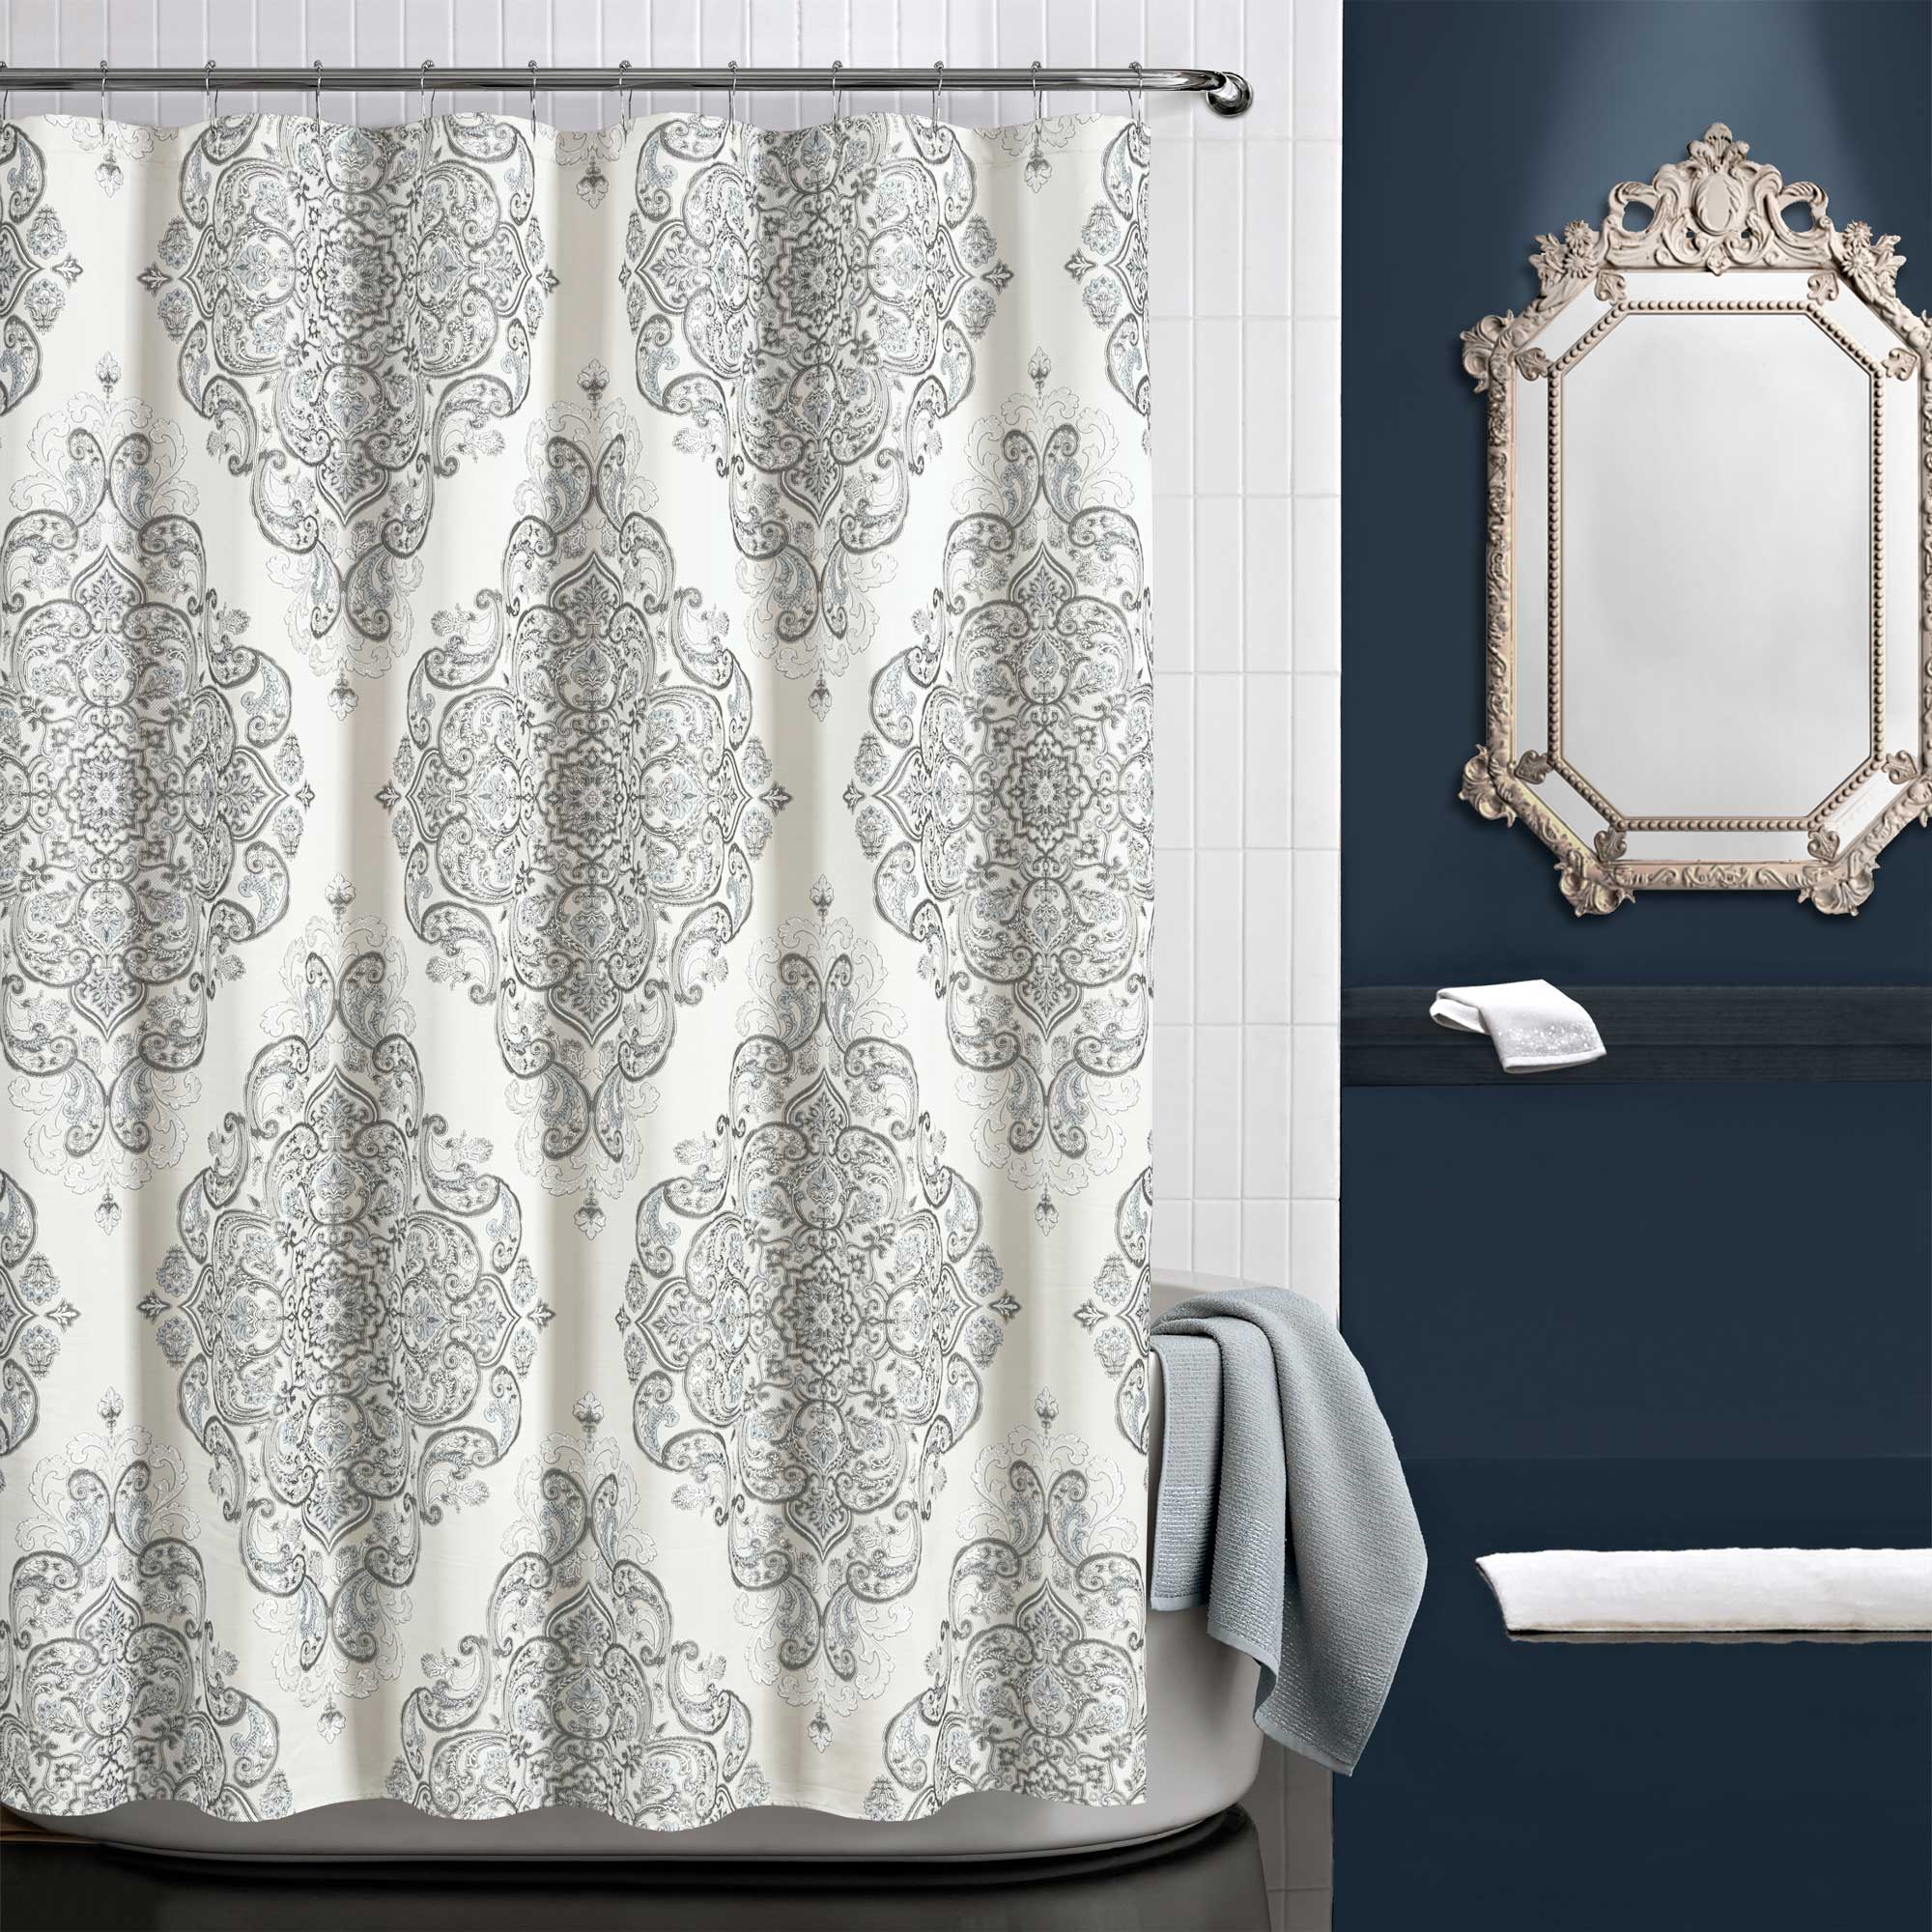 Shop Homethreads for Shower Curtains